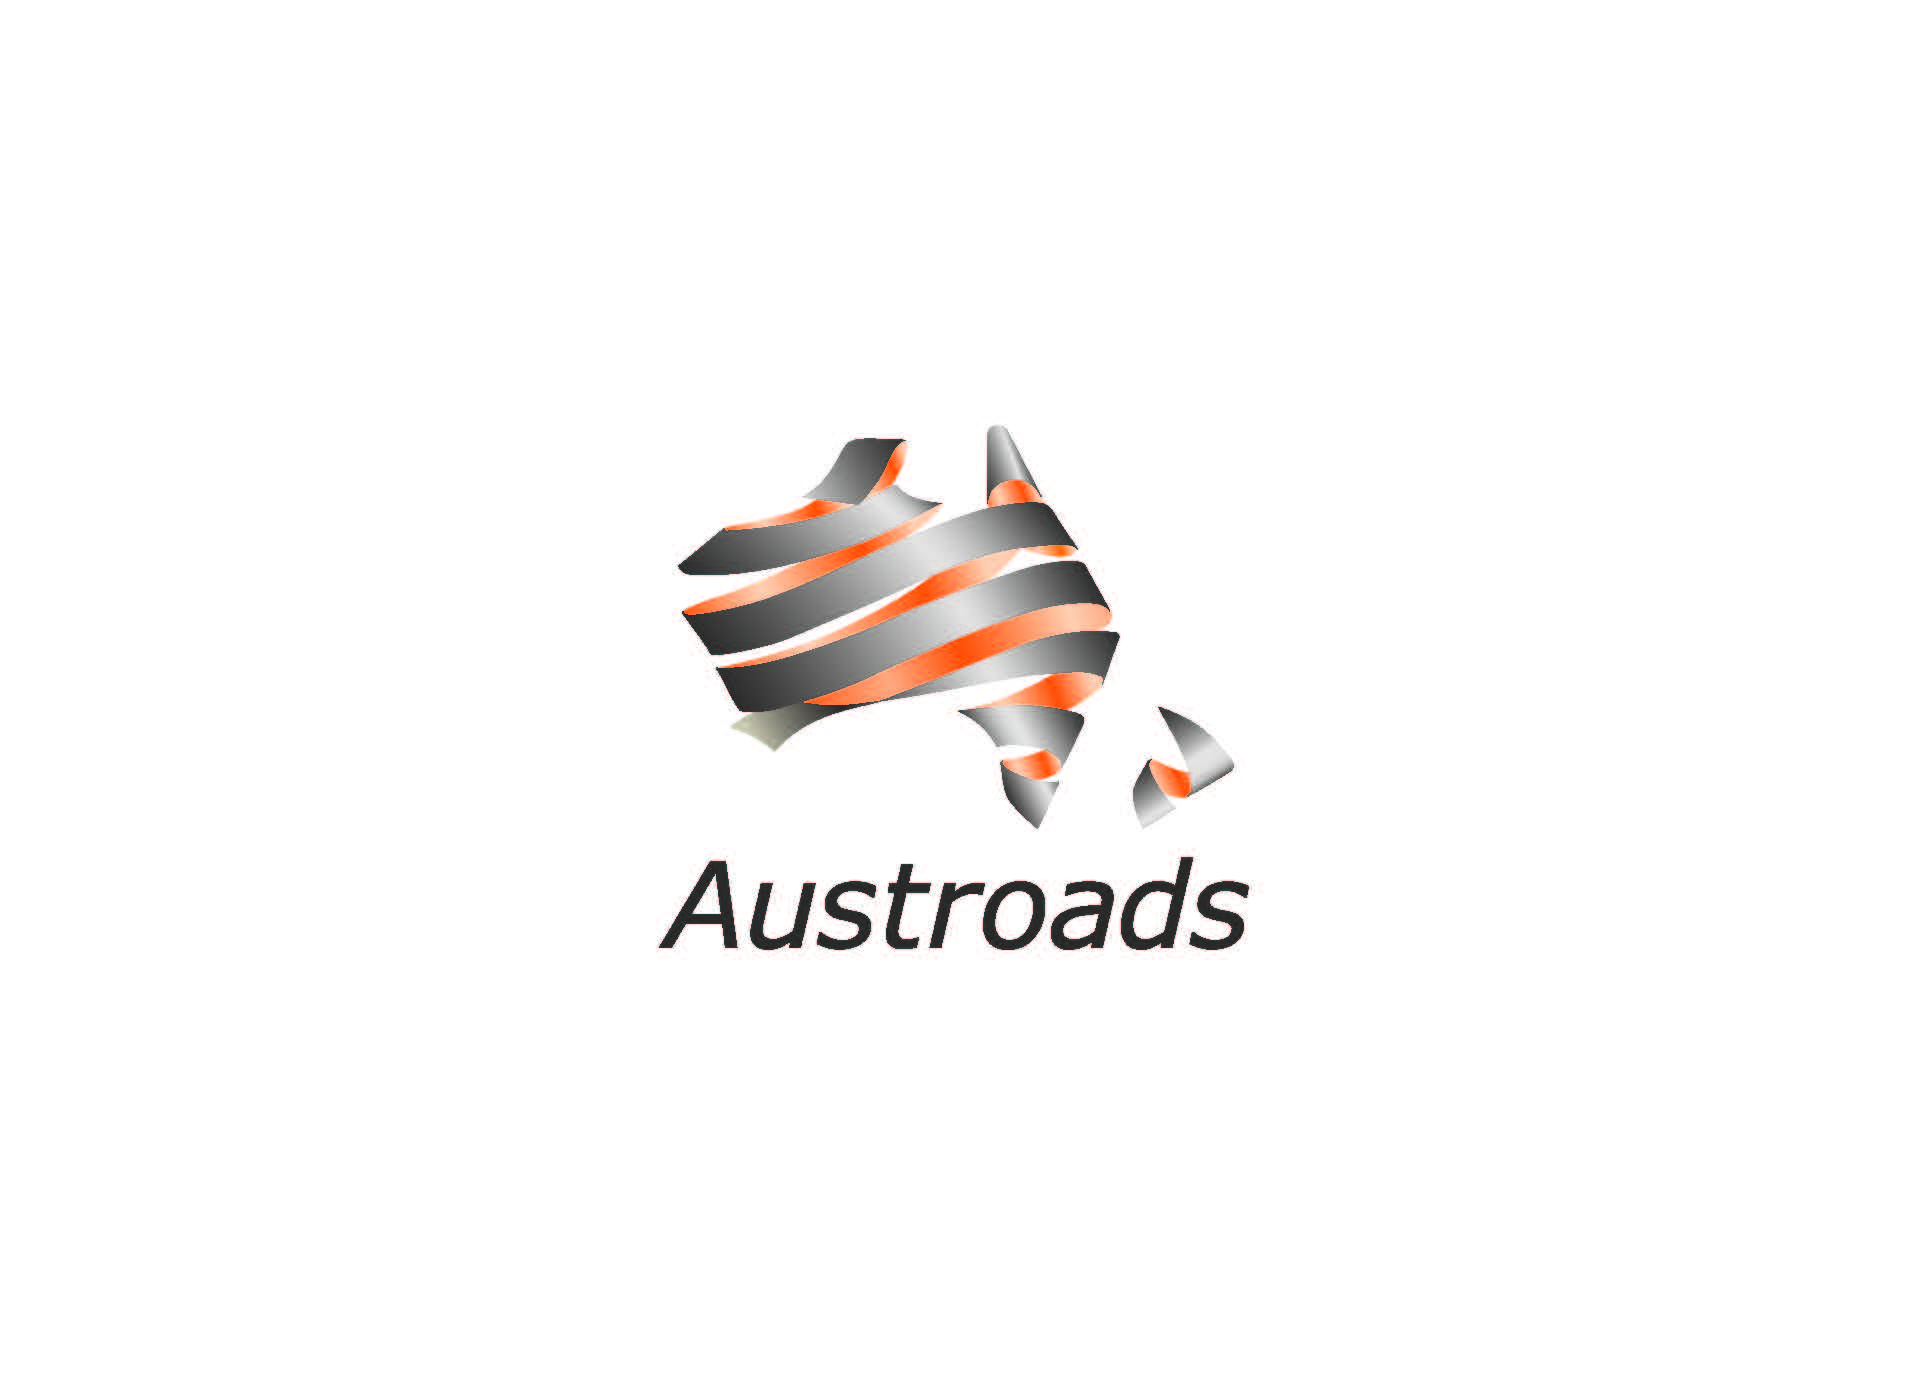 Austroads